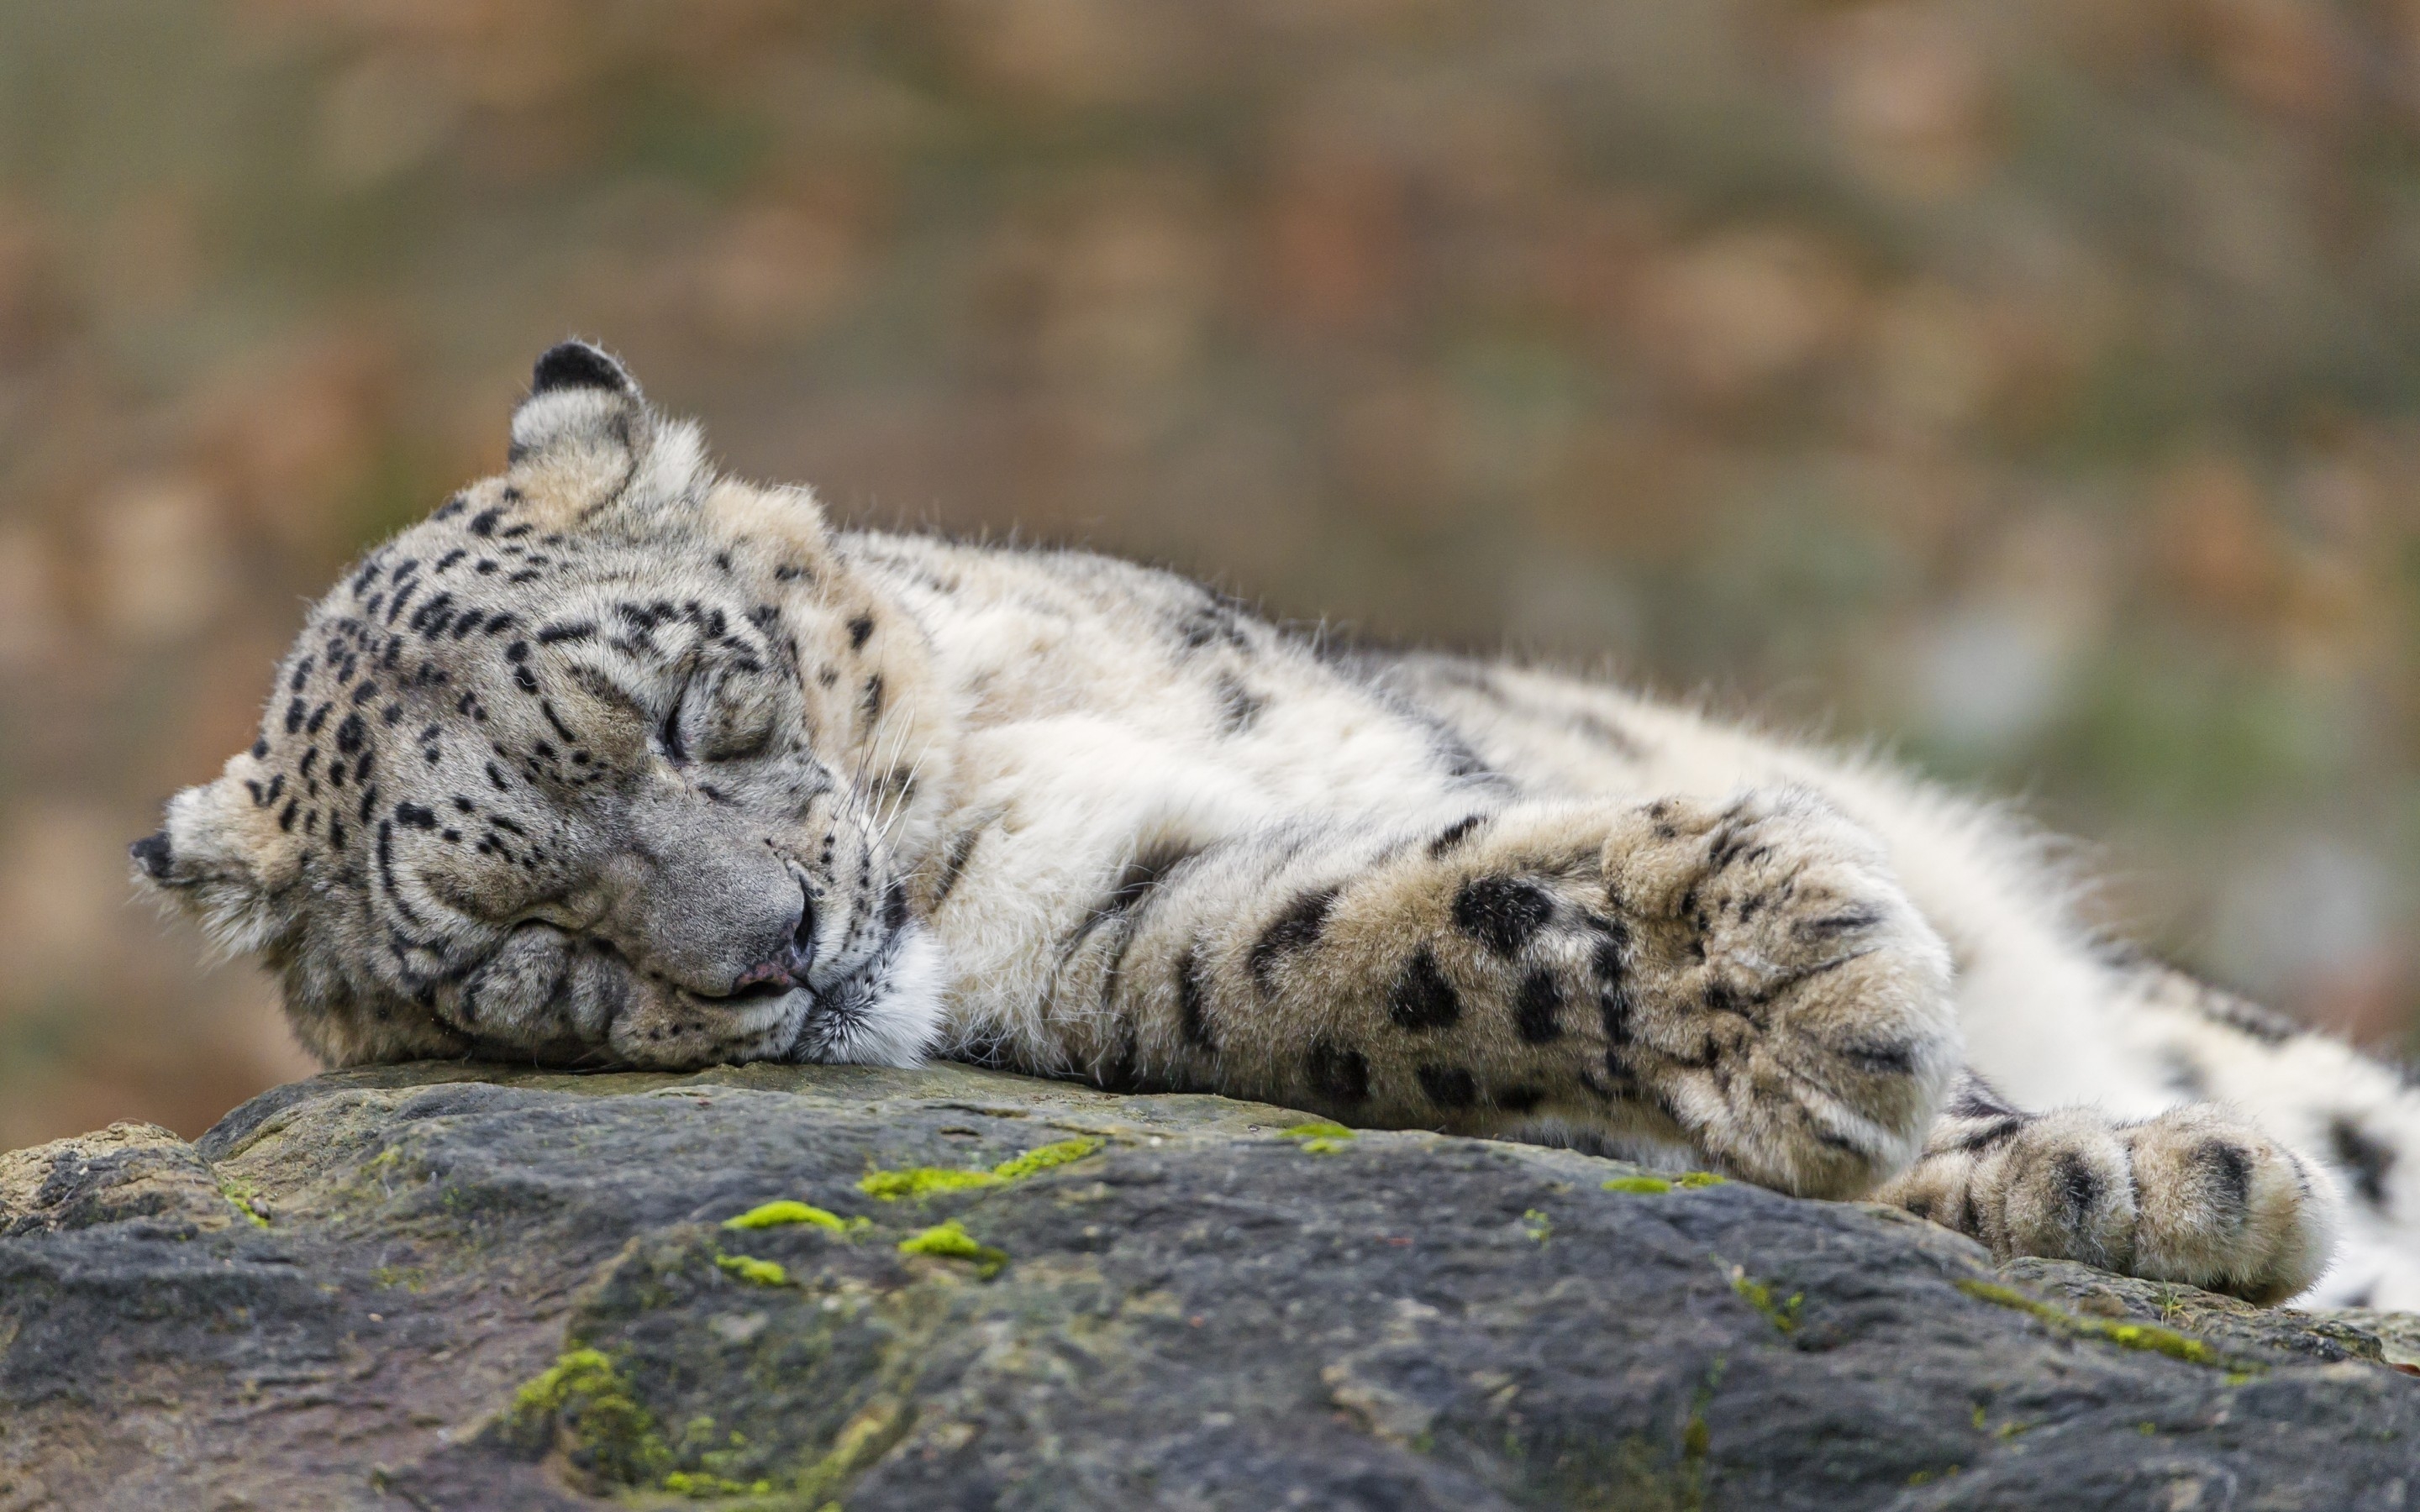 Sleeping Snow Leopard  for 2880 x 1800 Retina Display resolution